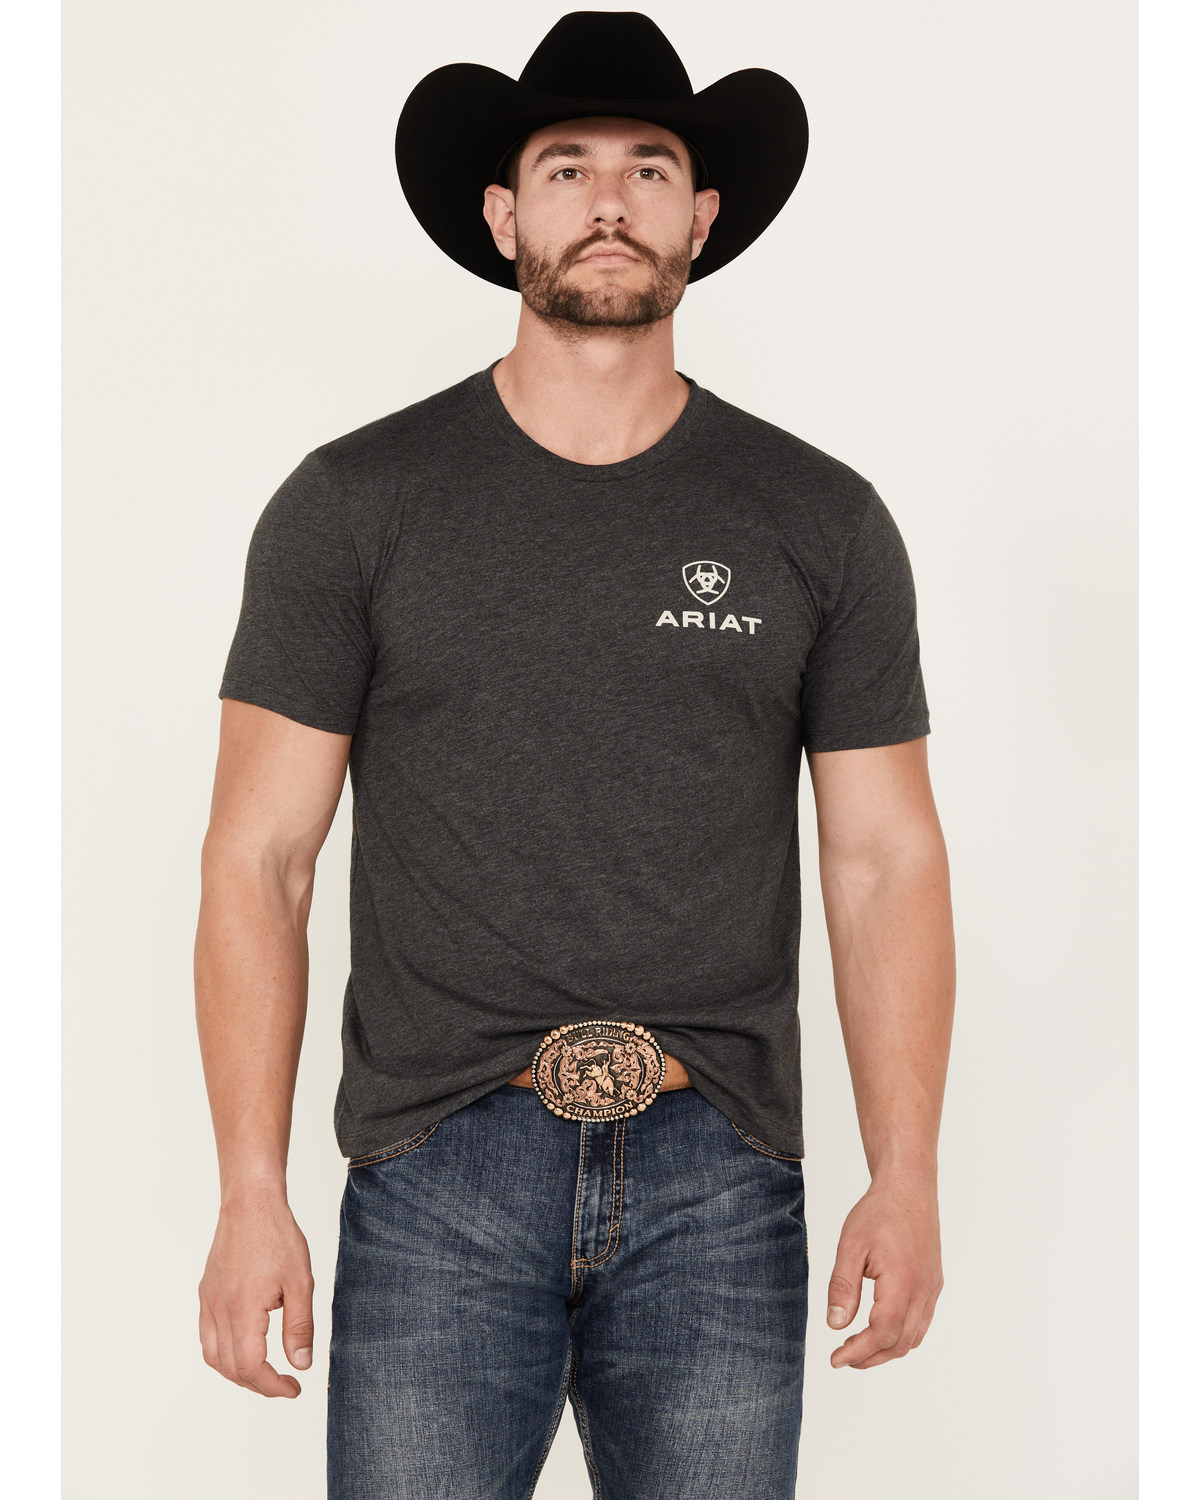 Ariat Men's Southwestern Print Logo Short Sleeve Graphic T-Shirt